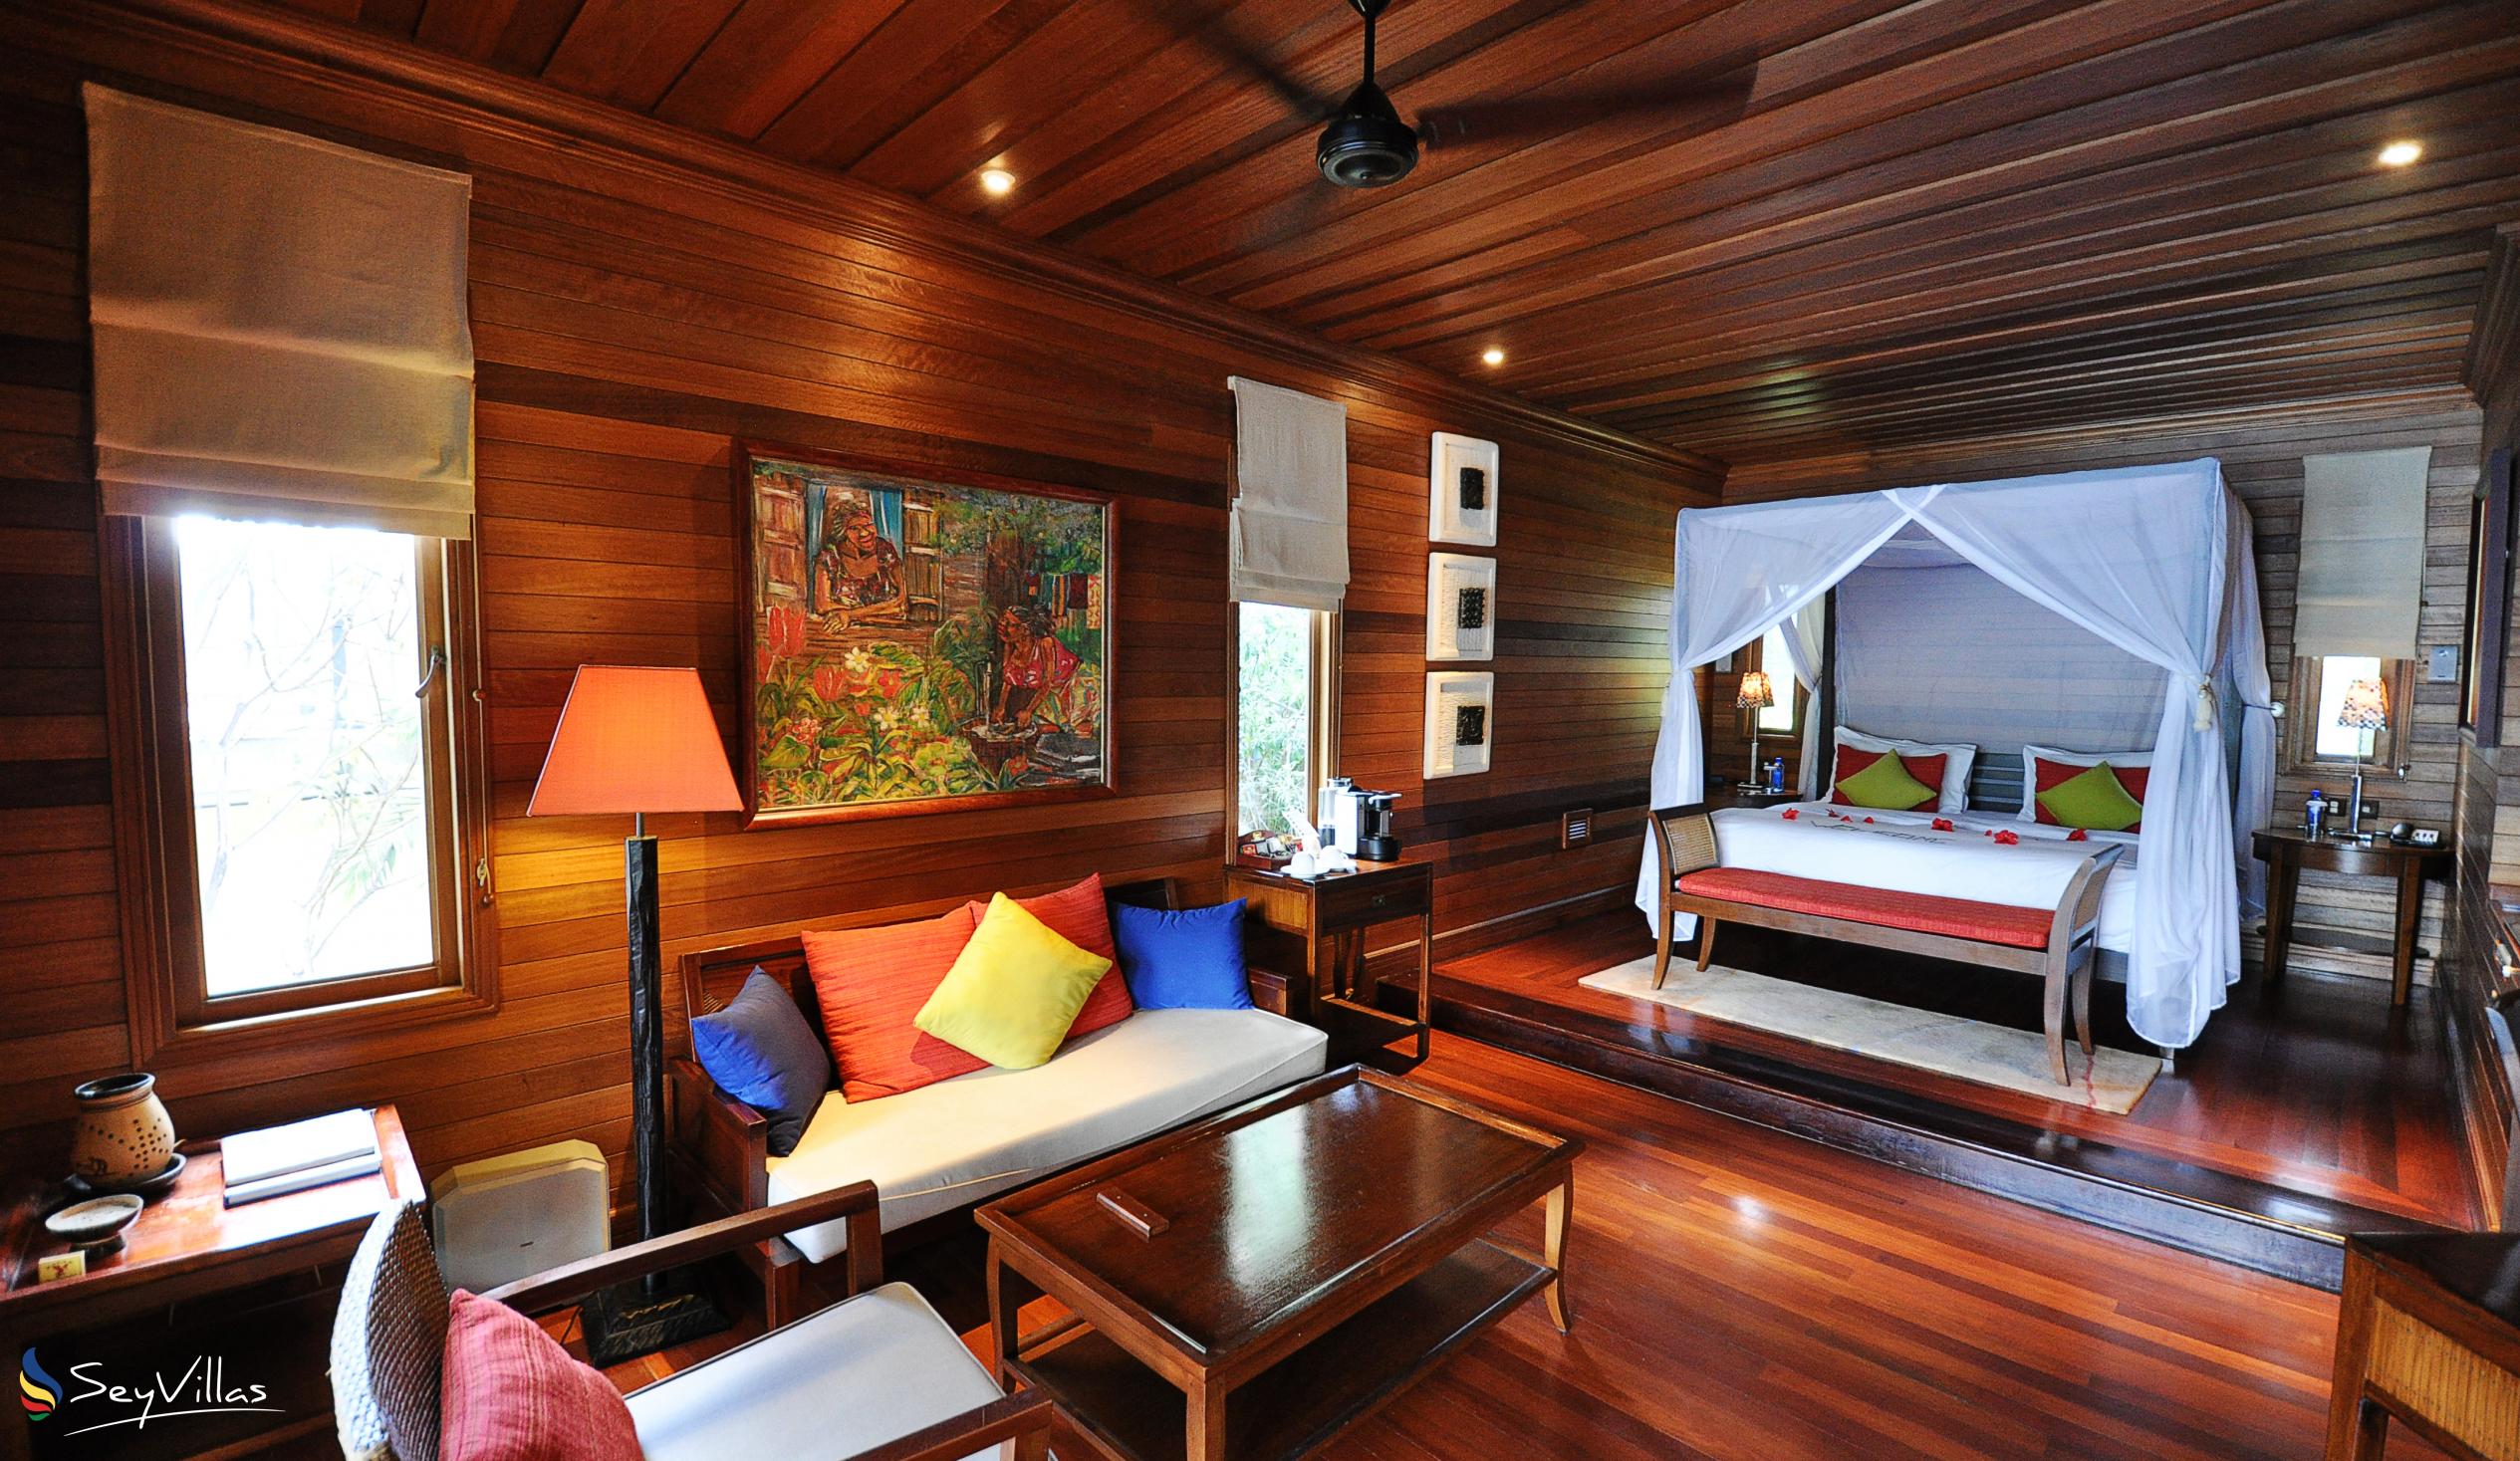 Foto 41: Hilton Seychelles Northolme Resort & Spa - King Premium Oceanfront Villa - Mahé (Seychellen)